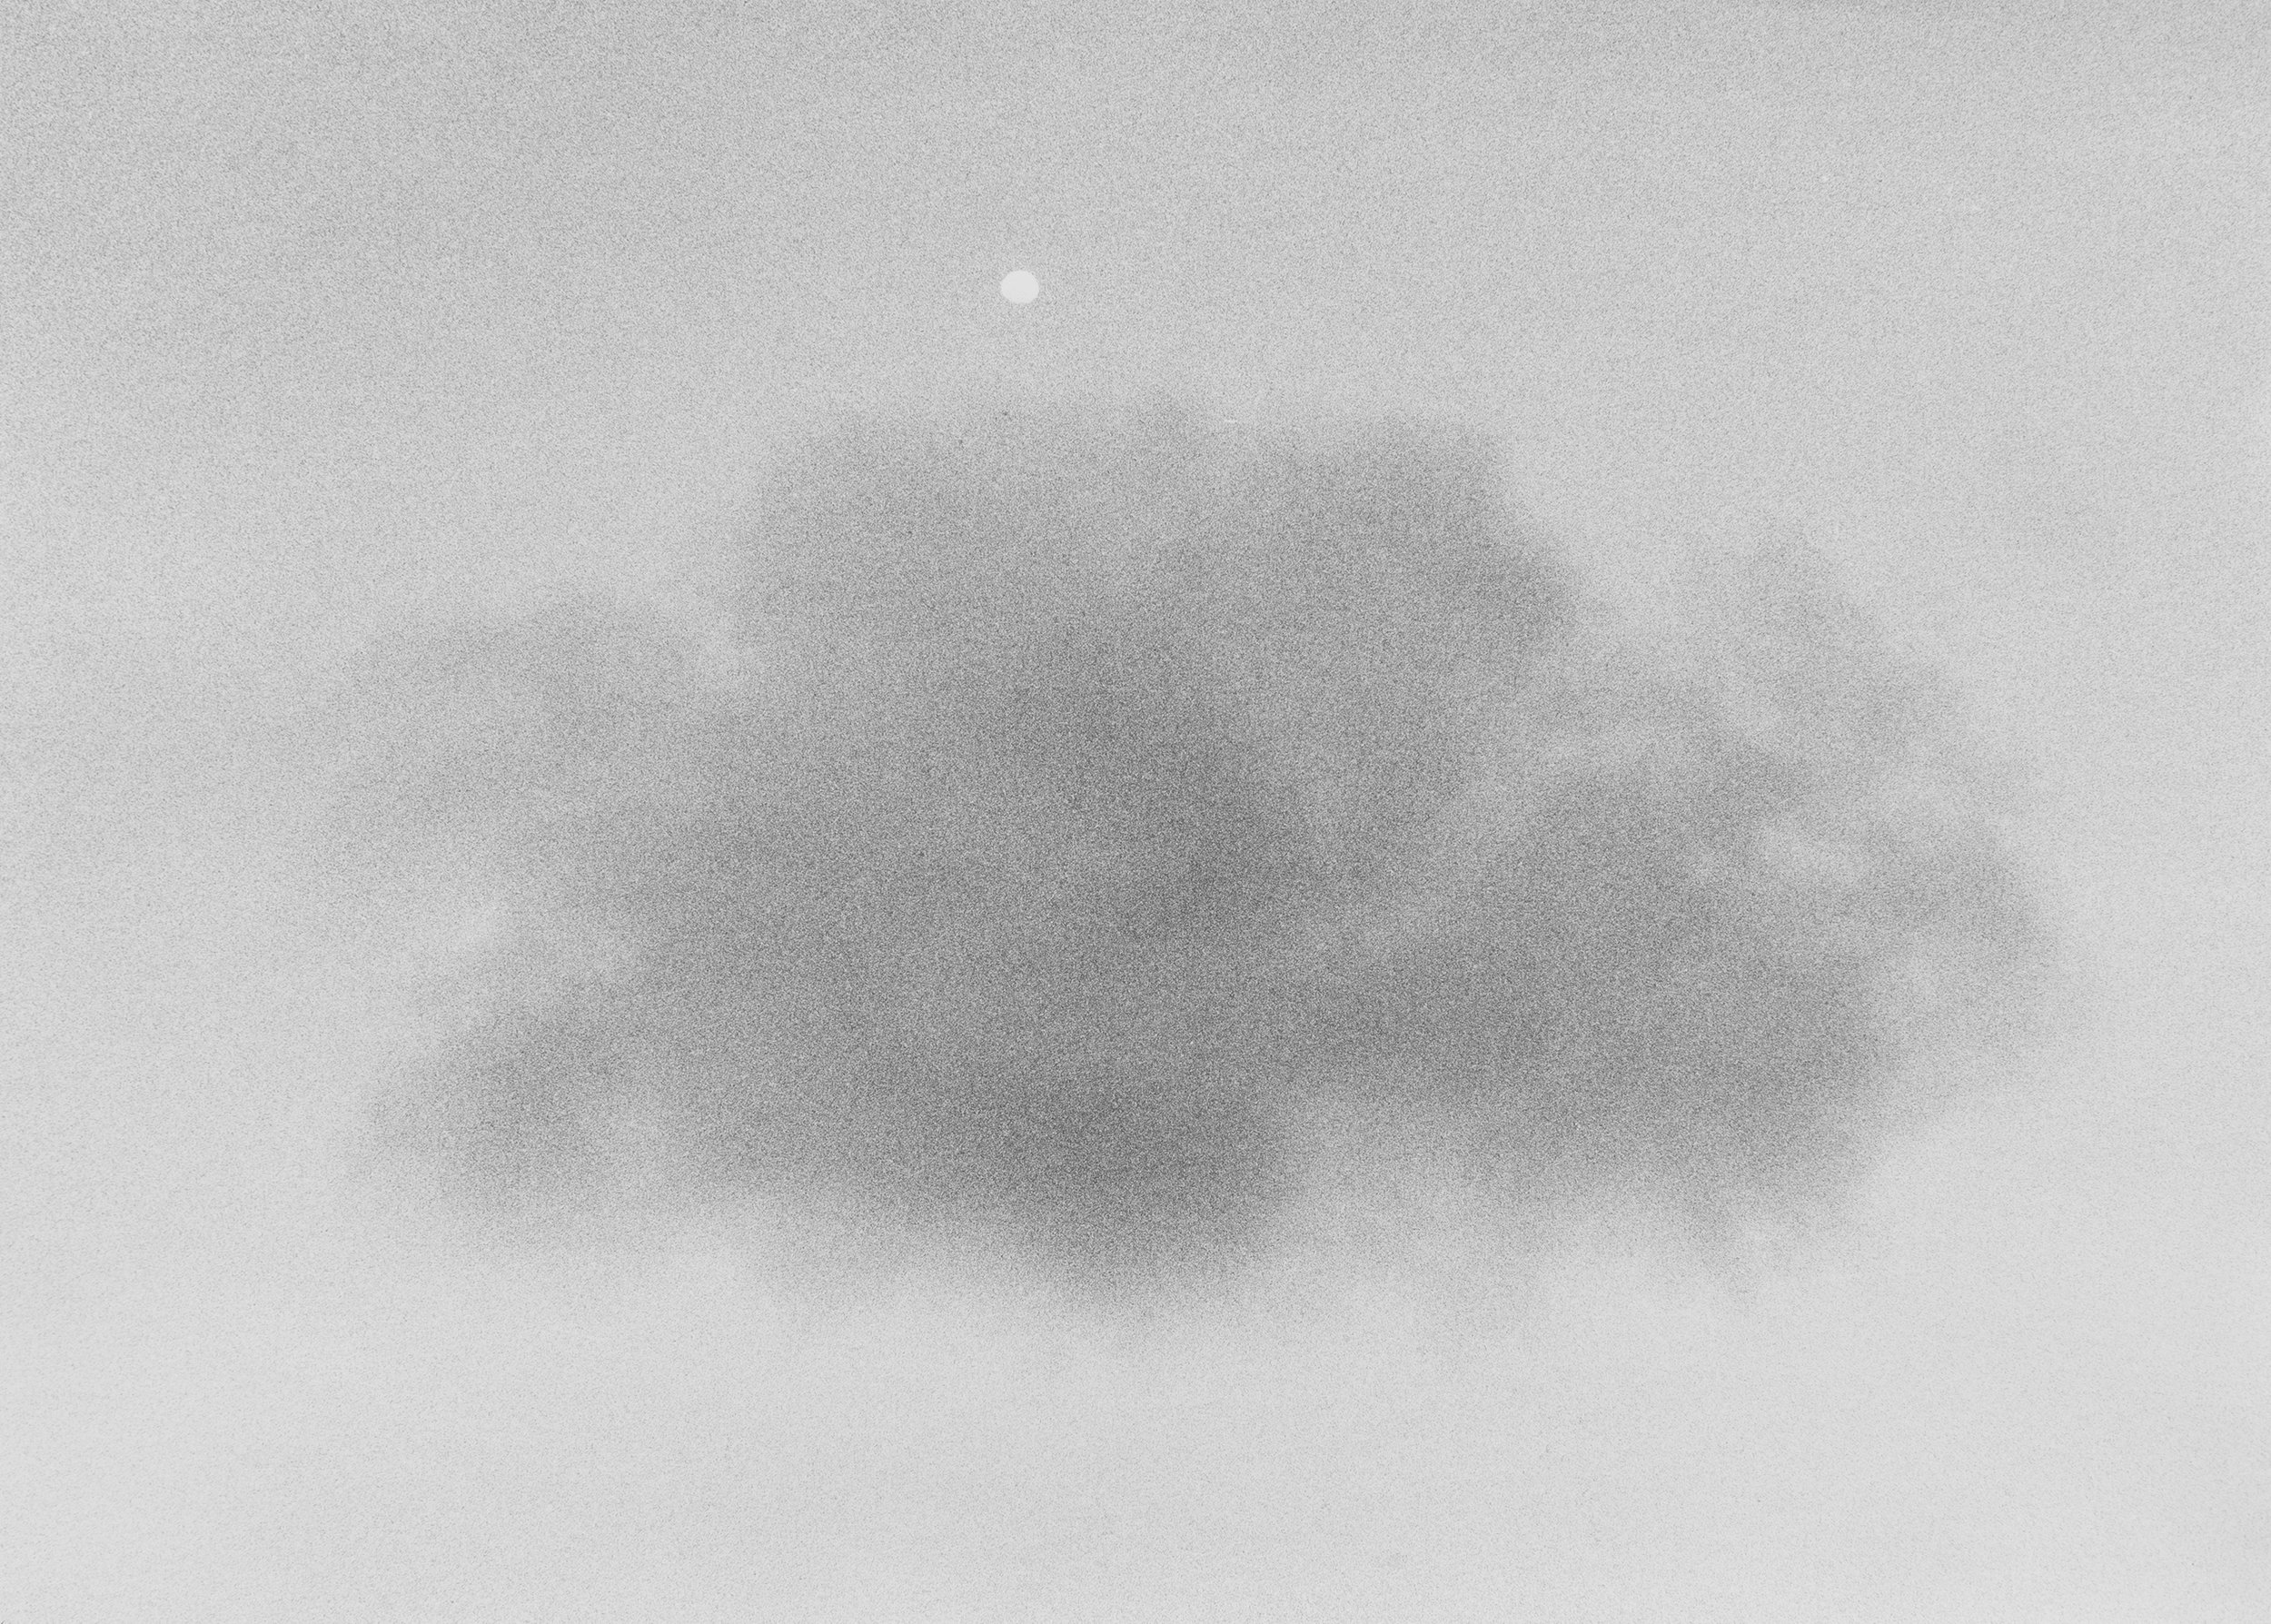  Cloud and Moon, 2020, silver gelatin print, 27.5 x 38 cm, edition 4/5  